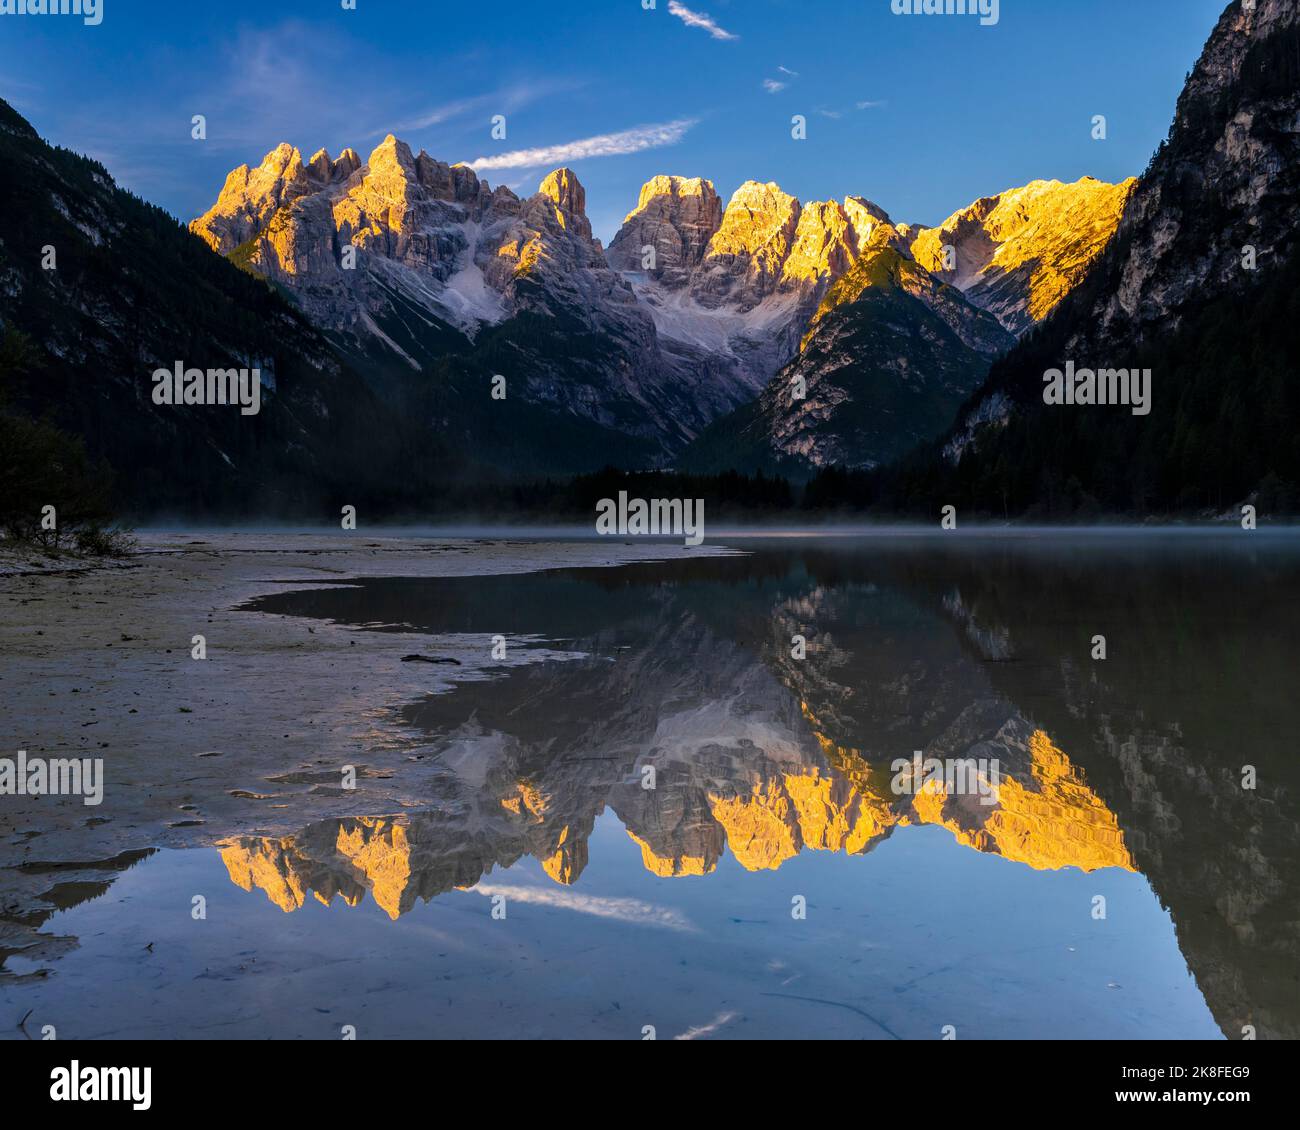 Italy, Trentino-Alto Adige/Sudtirol, Mountains reflecting in Lago di Landro at dusk Stock Photo